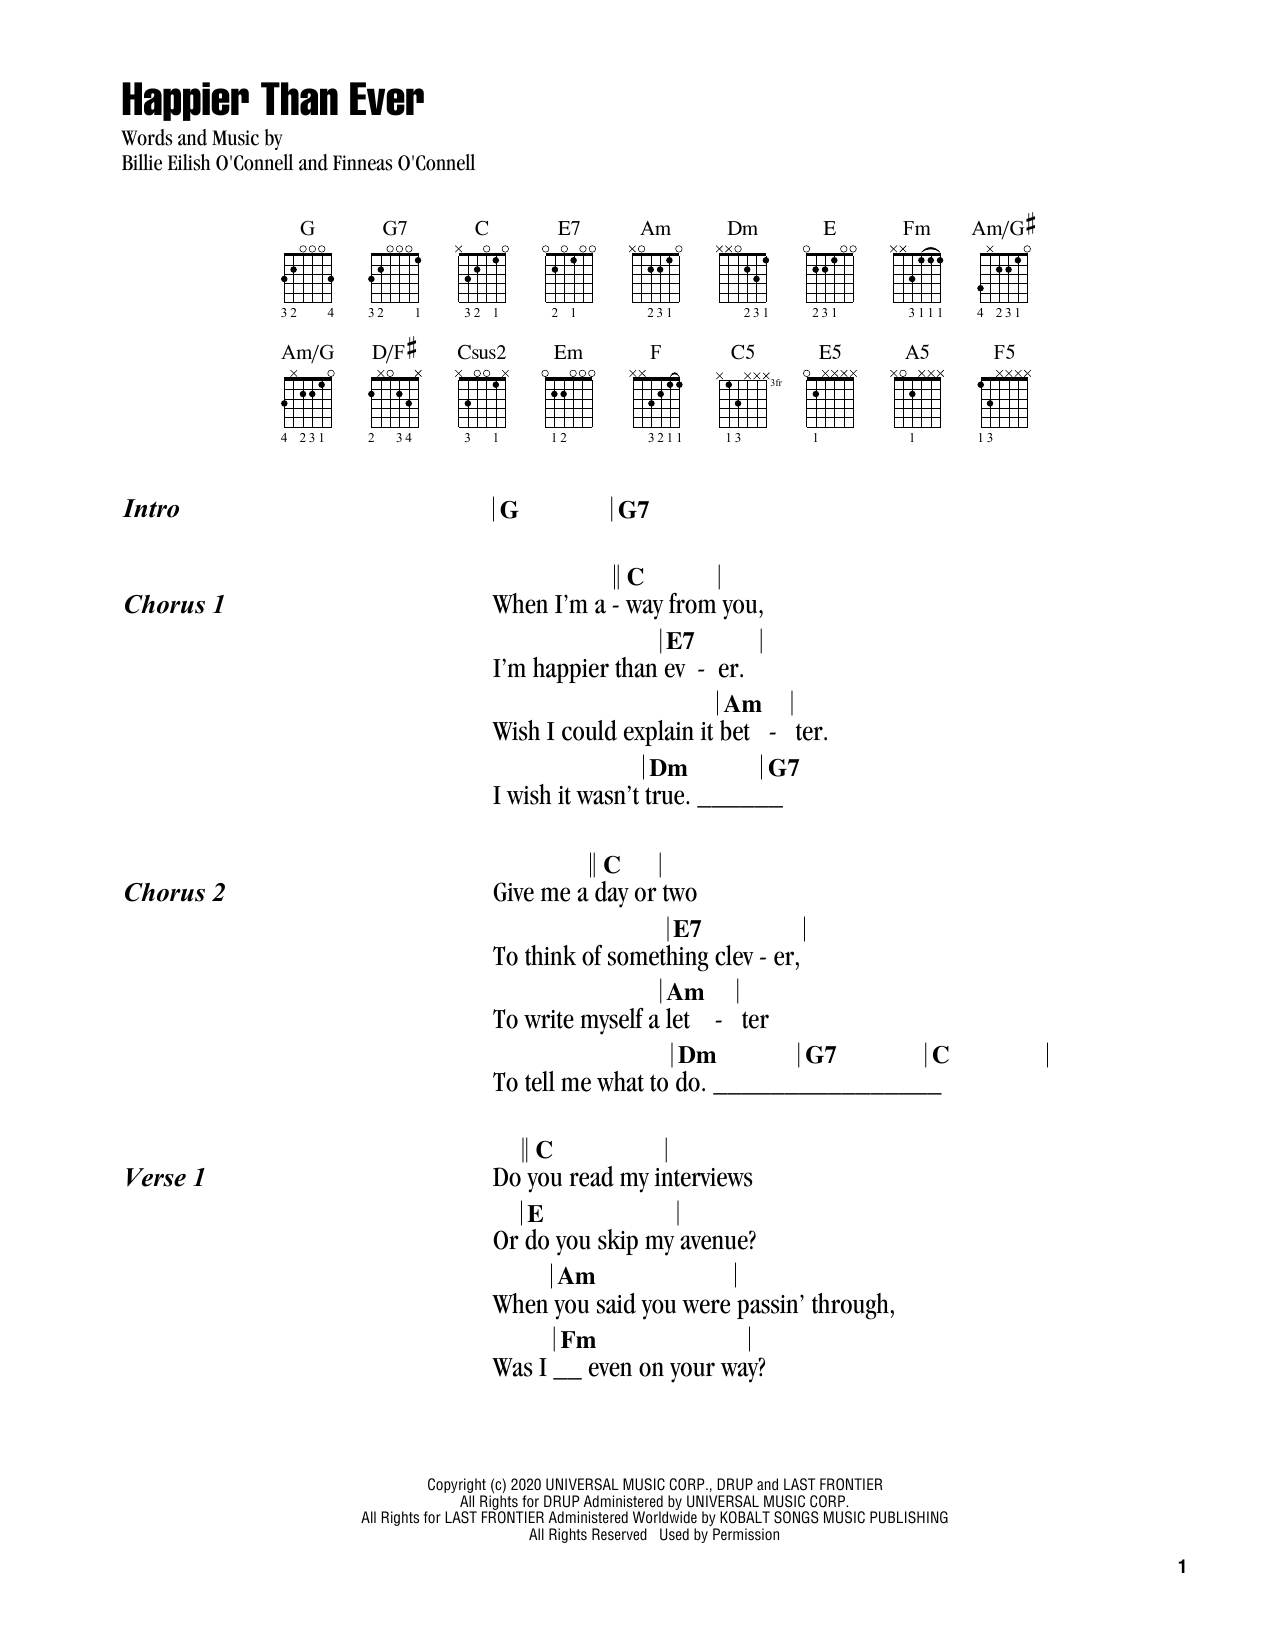 Billie Eilish "Happier Than Ever" Sheet Music Notes | Download PDF